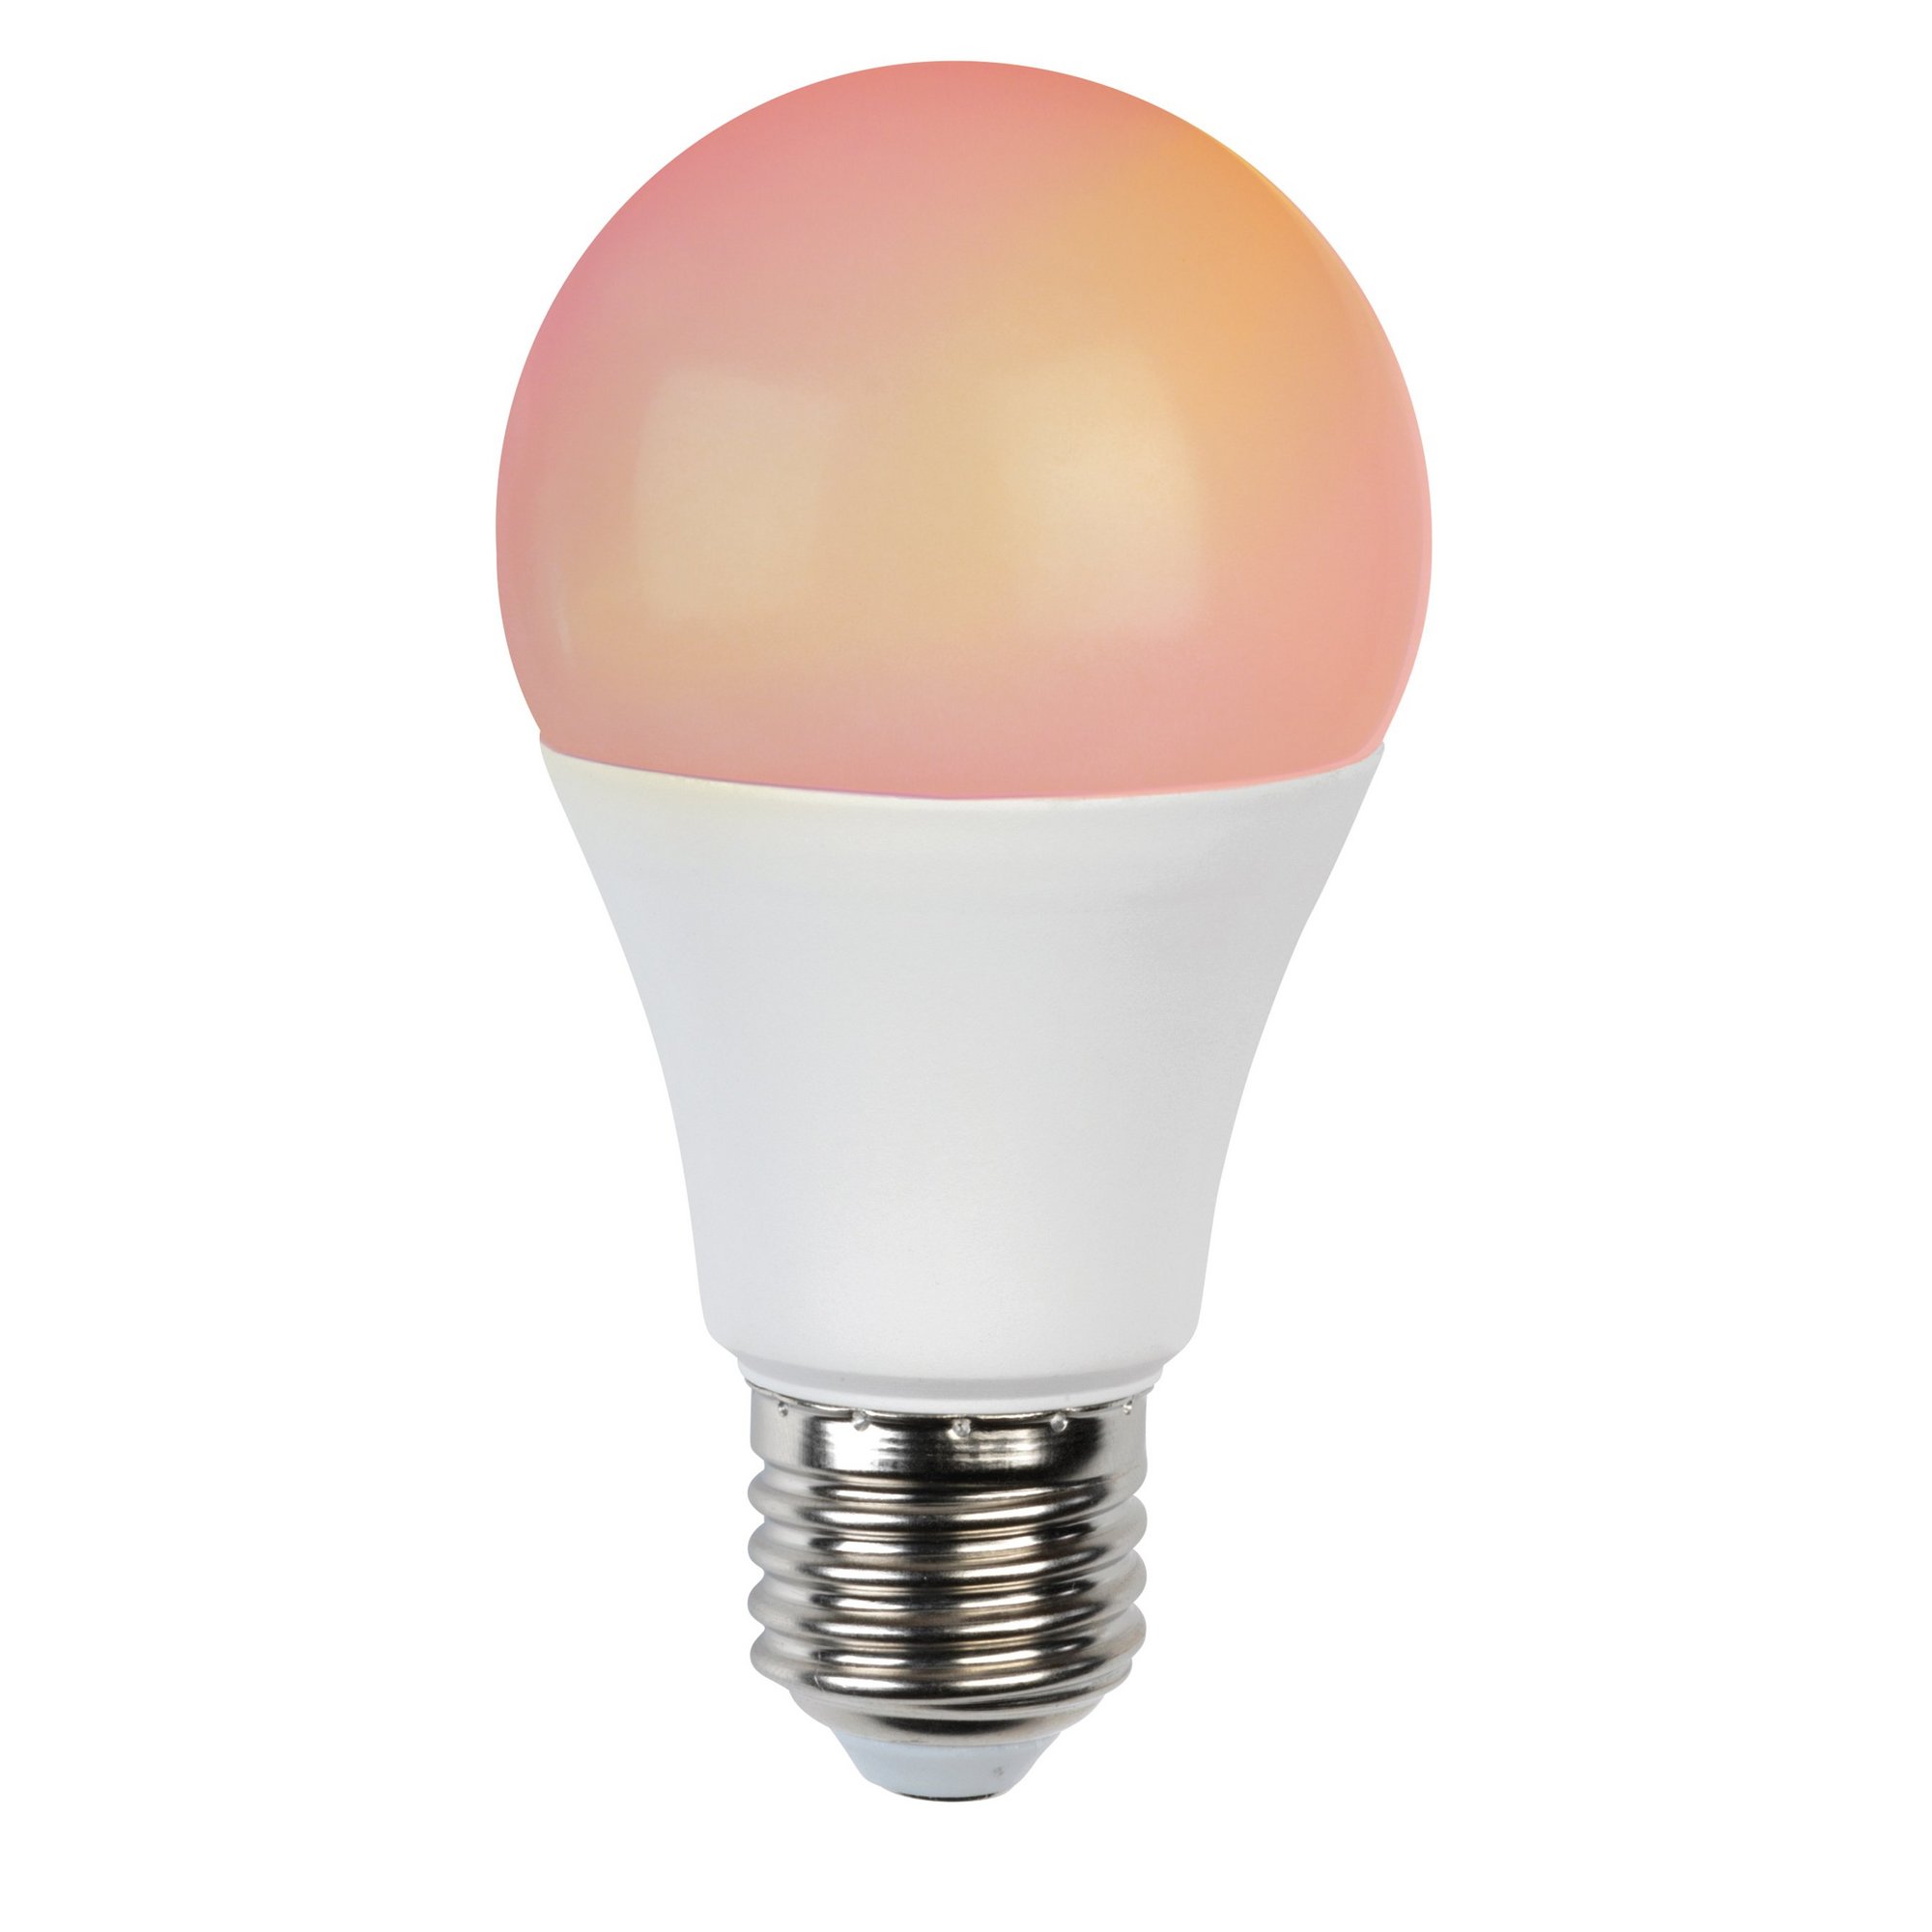 Intempo Intempo Home Smart Light Bulb - Bayonet | 